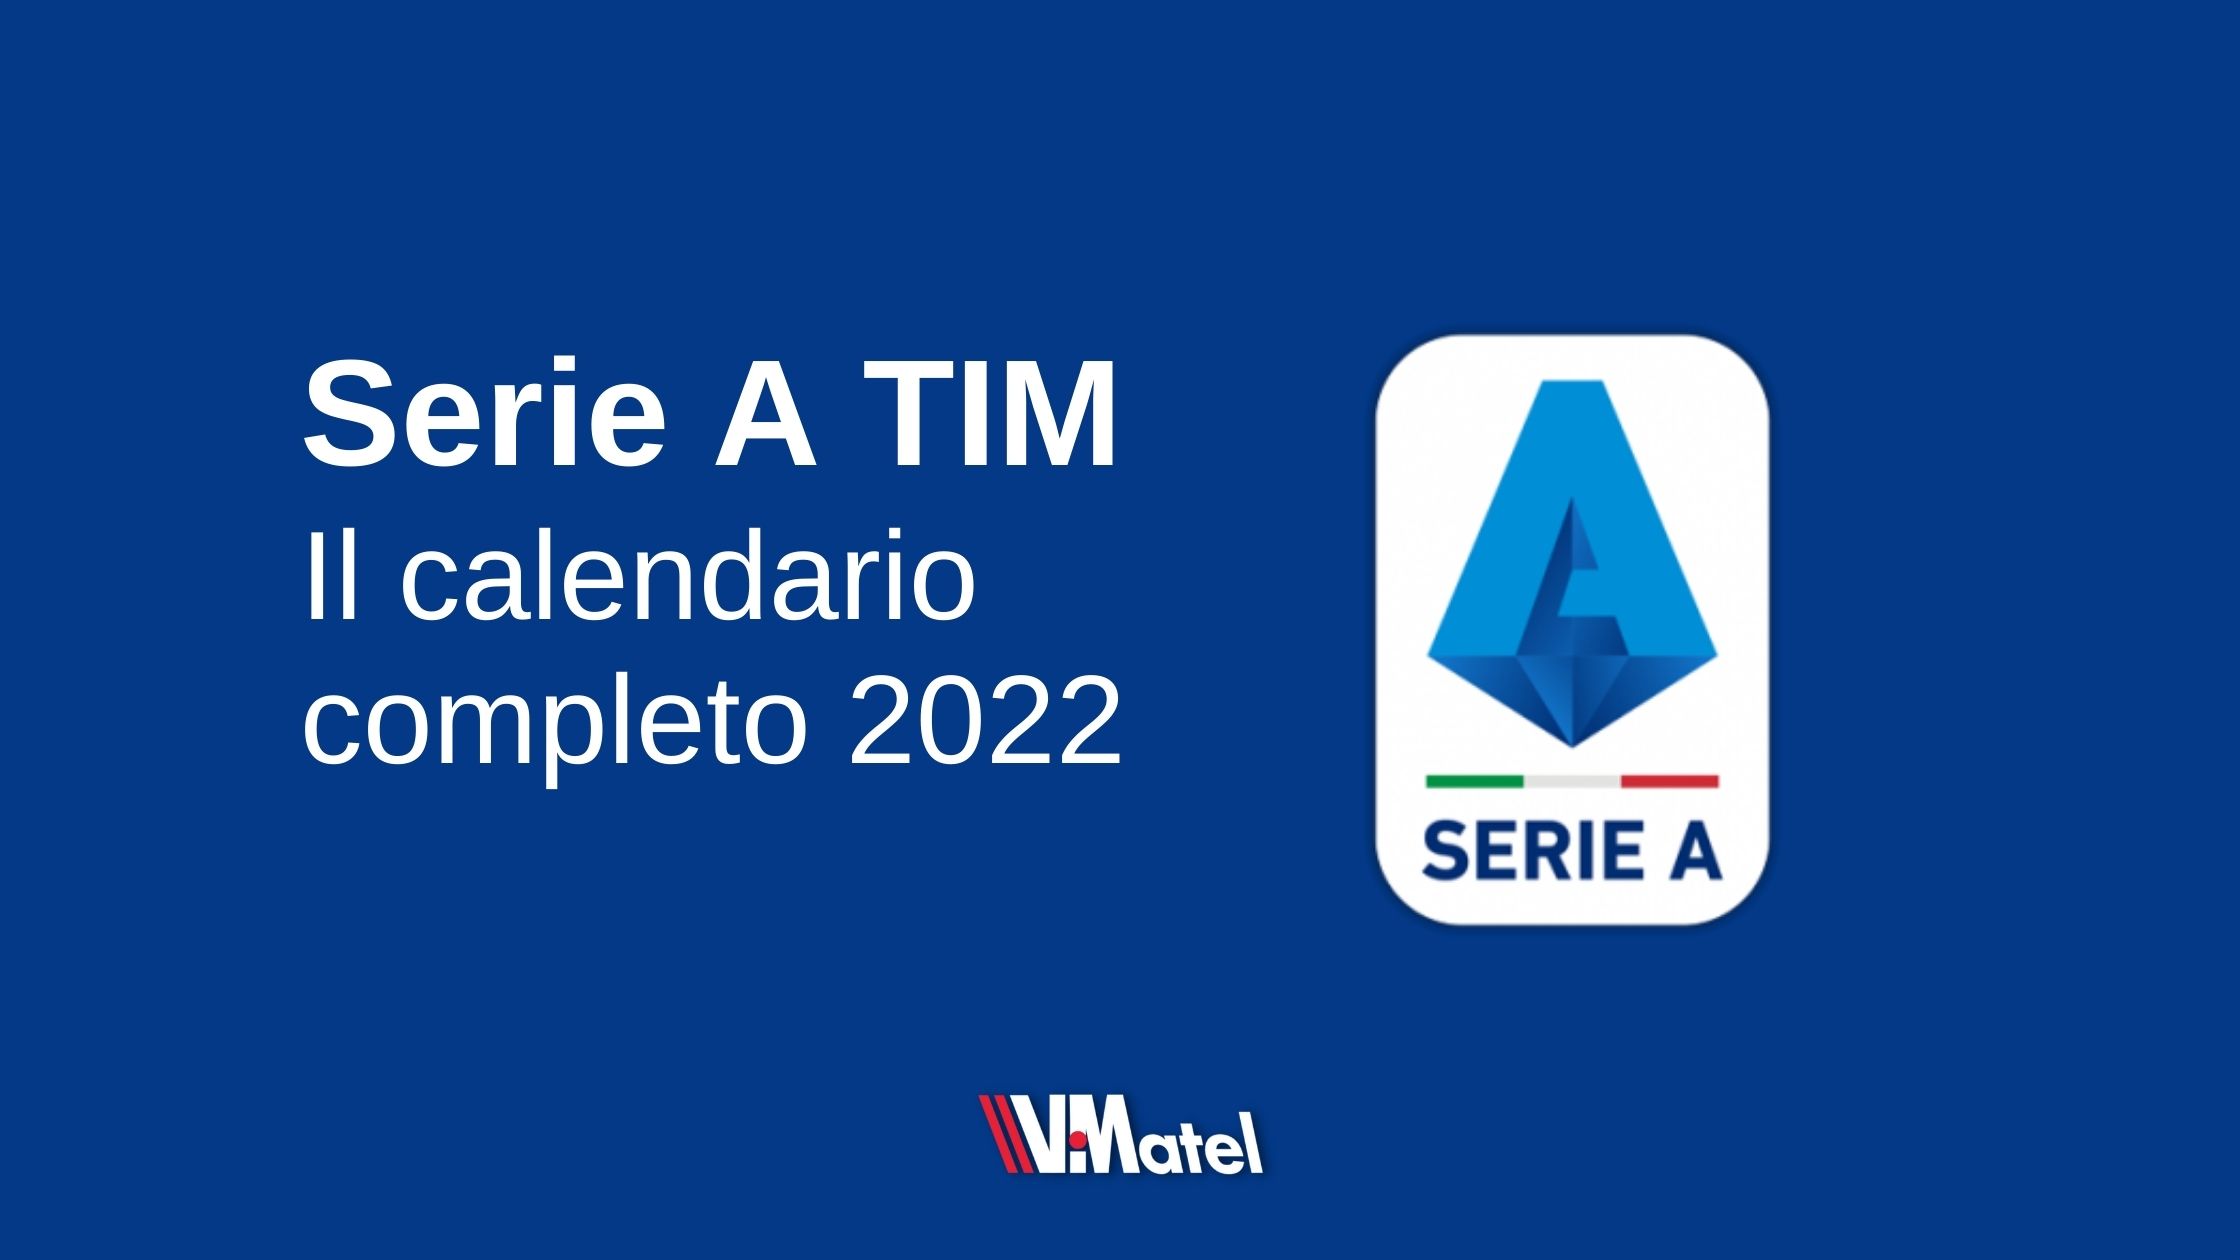 Serie A Tim: the complete 2022 Calendar